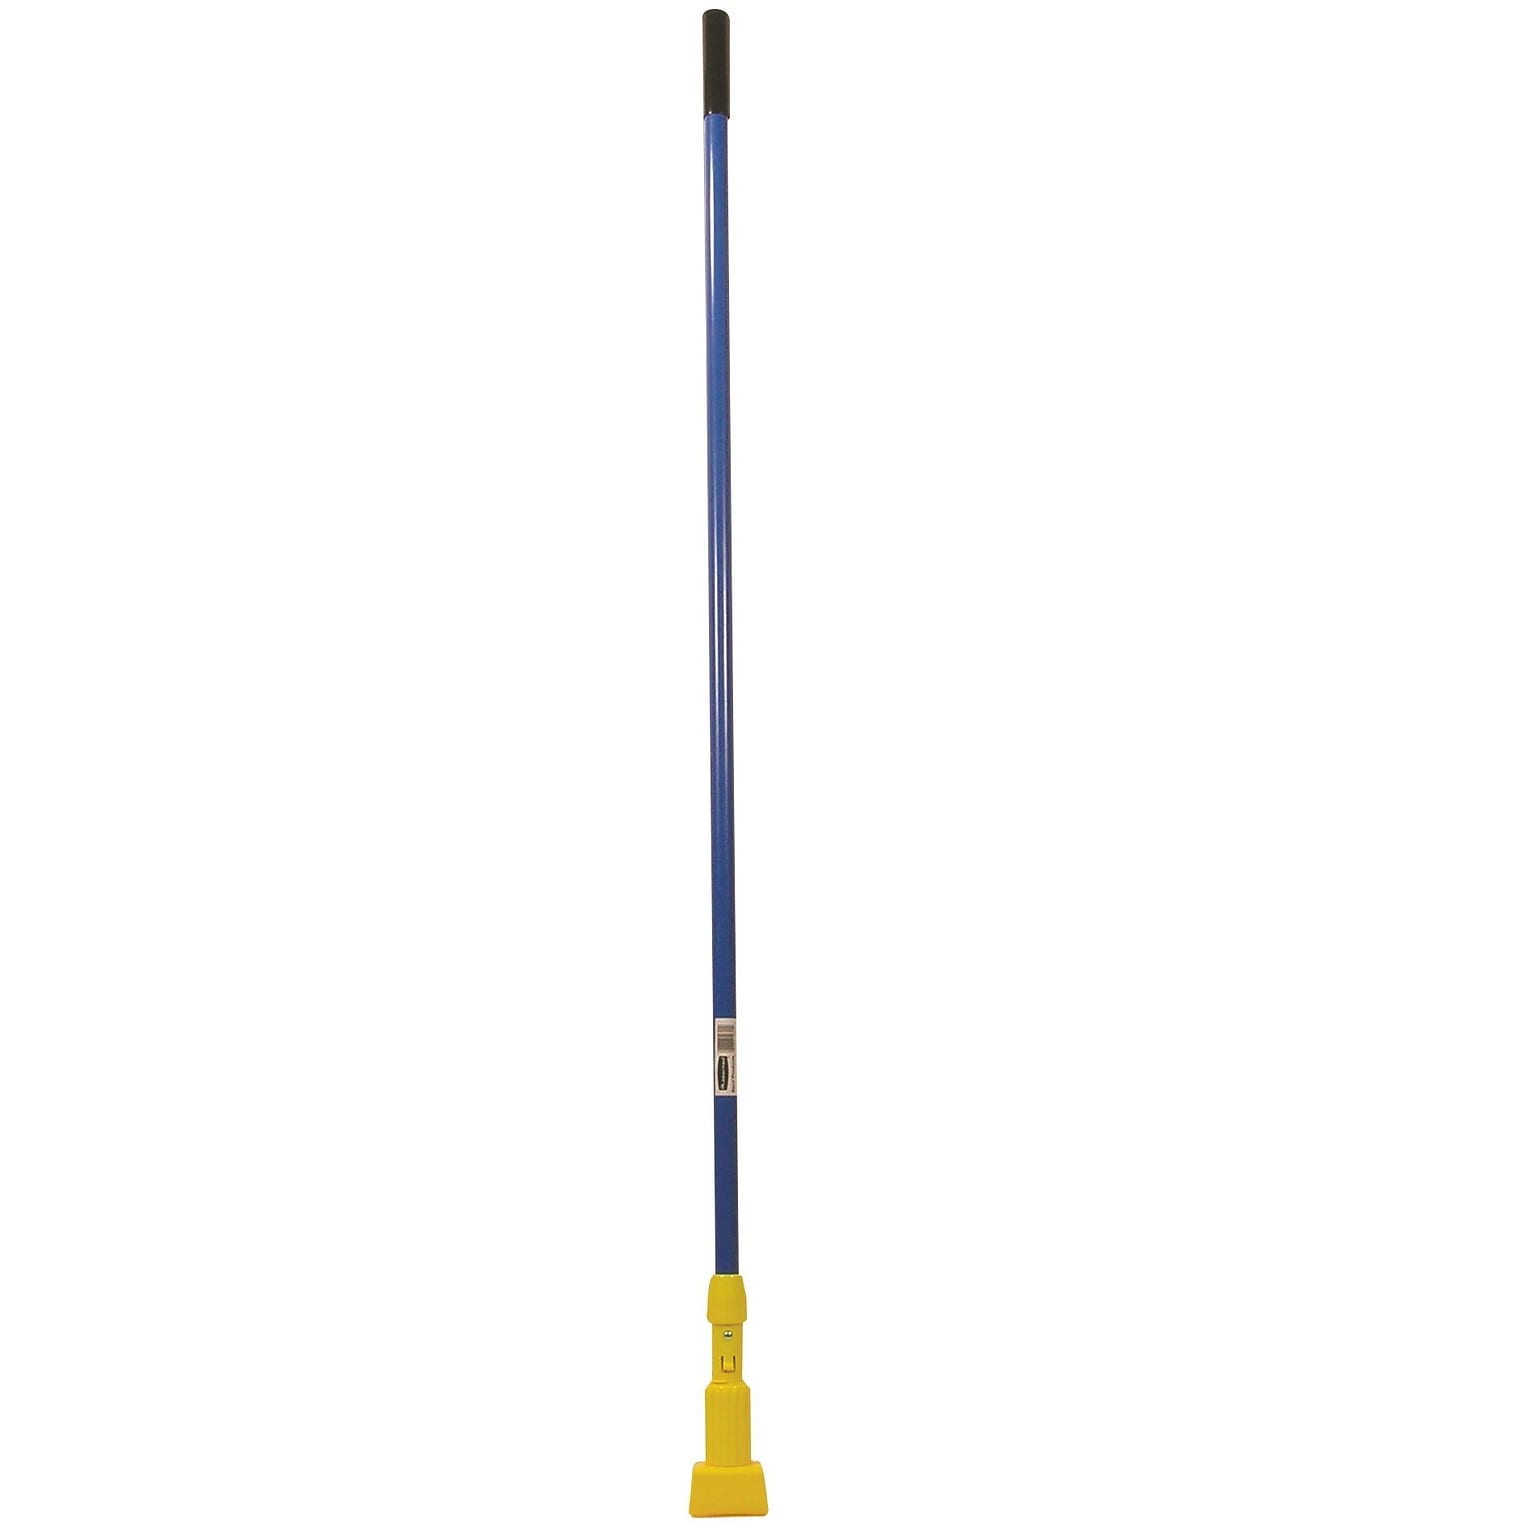 Rubbermaid Gripper Clamp Style 60 Fiberglass Wet Mop Handle, Yellow/Blue (FGH24600BL00)